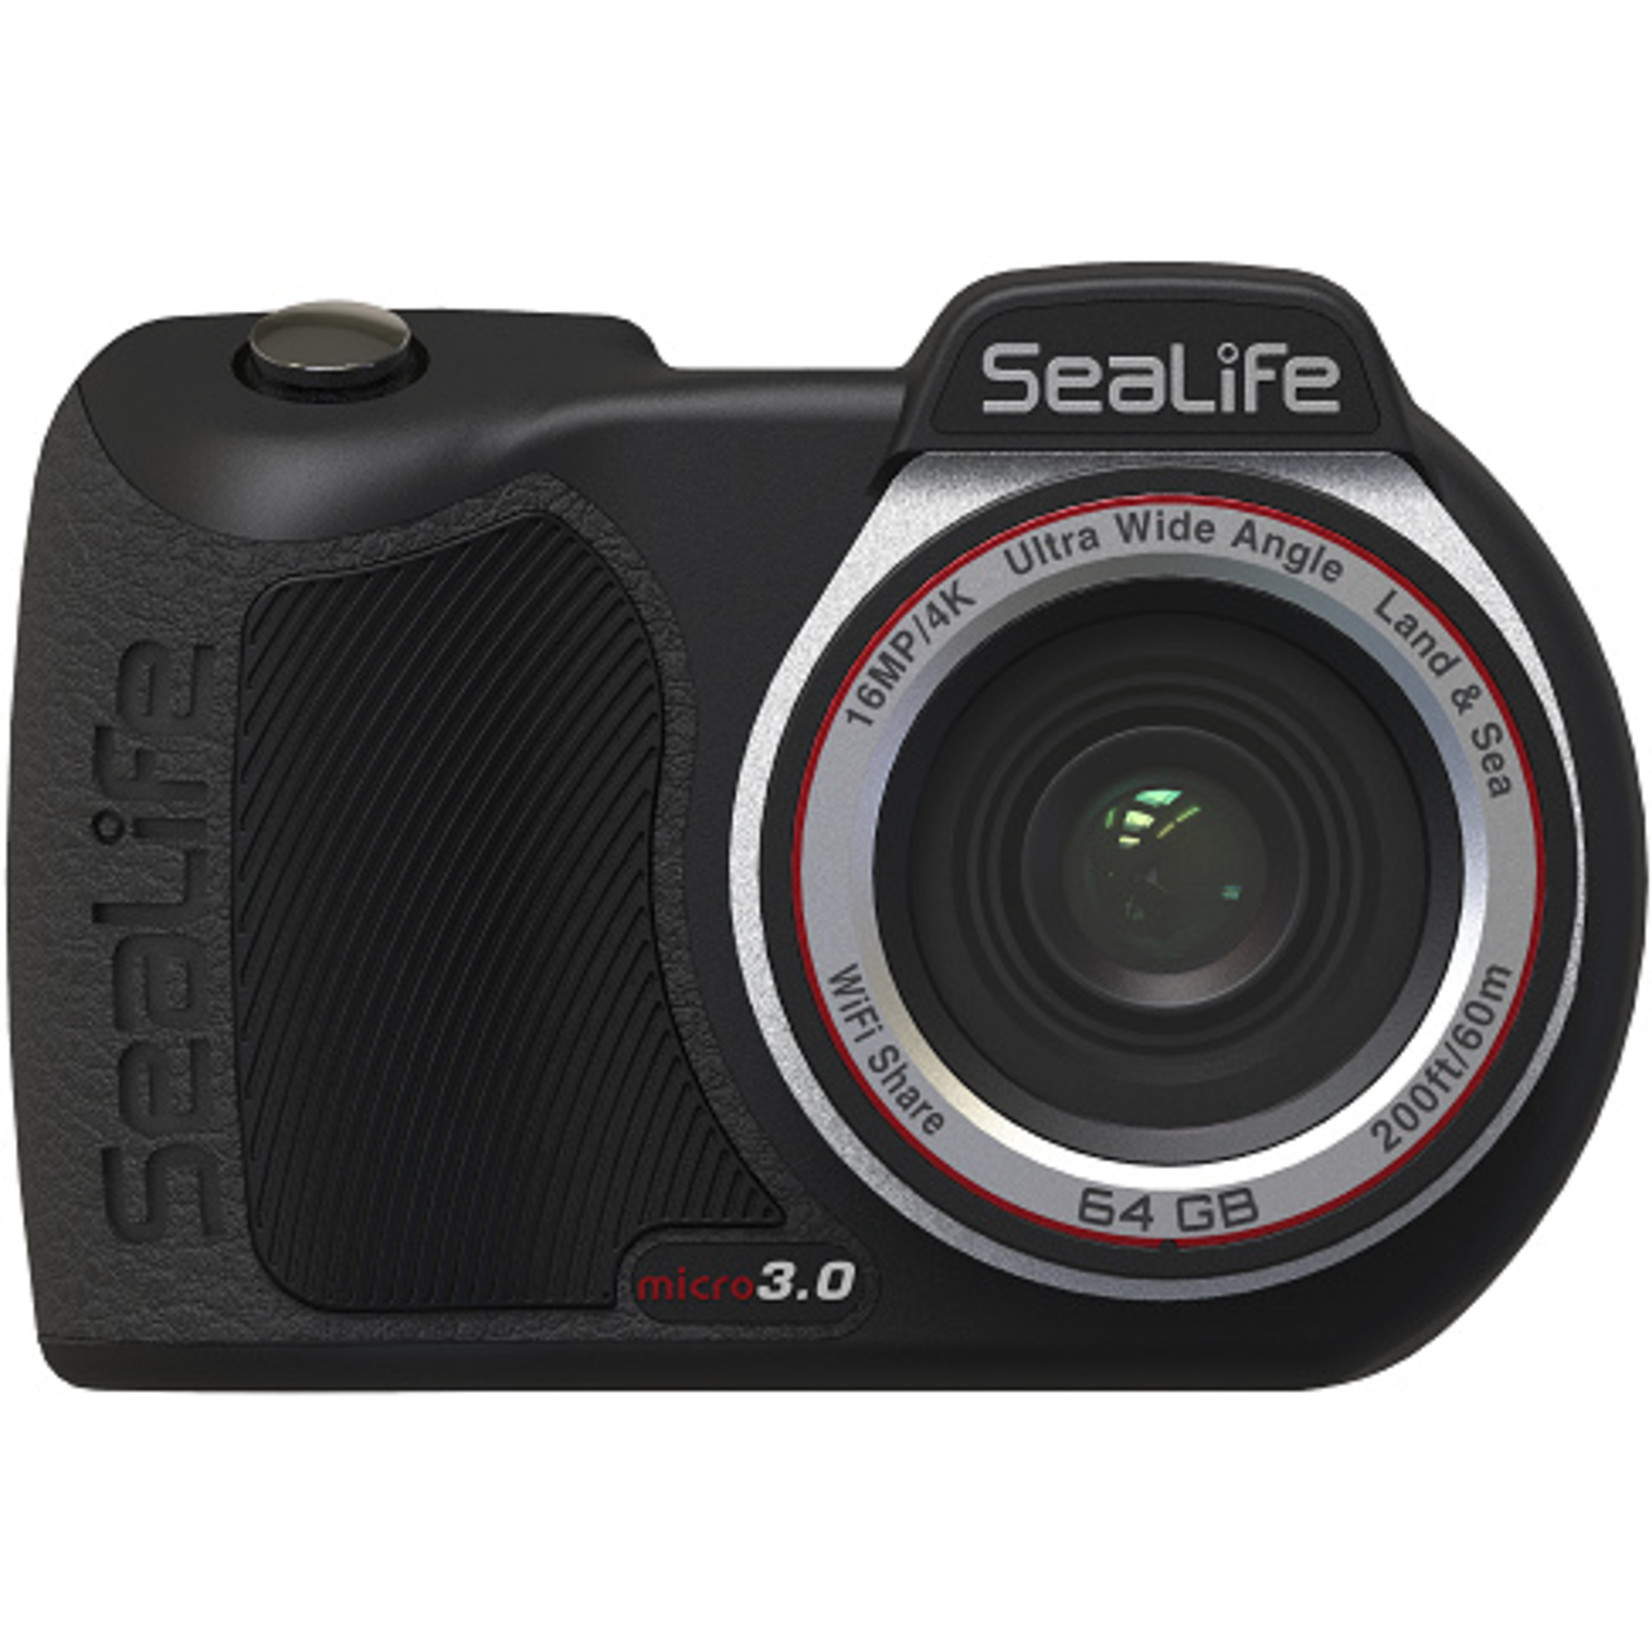 Sealife Micro 3.0 64 GB underwater camera